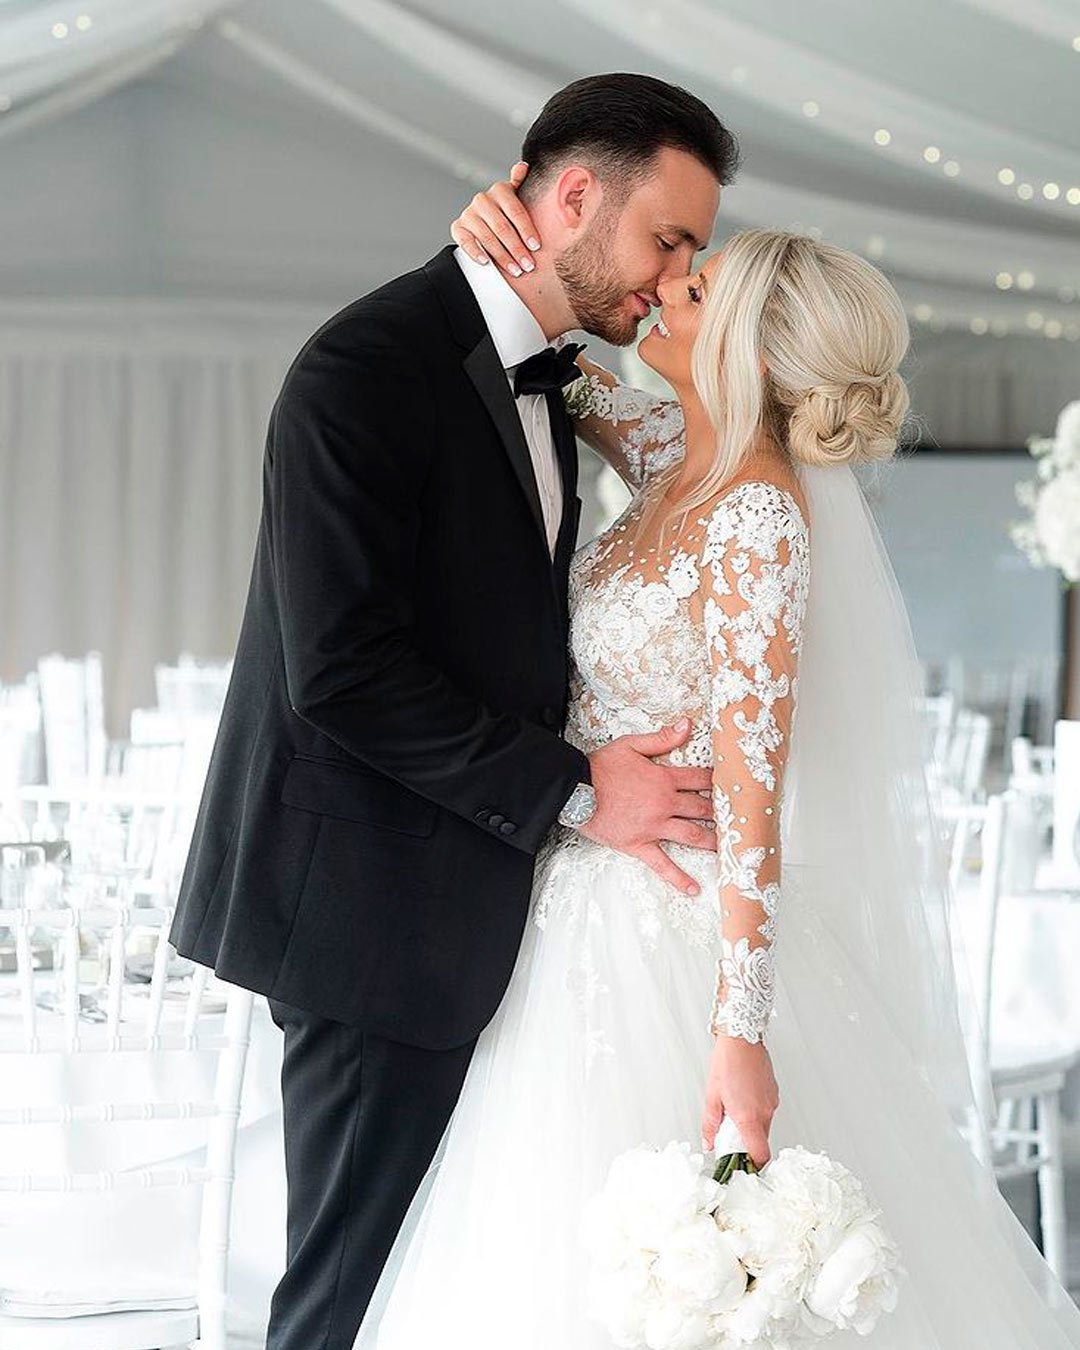 https://www.weddingforward.com/wp-content/uploads/2021/05/american-wedding-traditions-vows-bride-groom-kissing-chelseawhitephotog.jpg